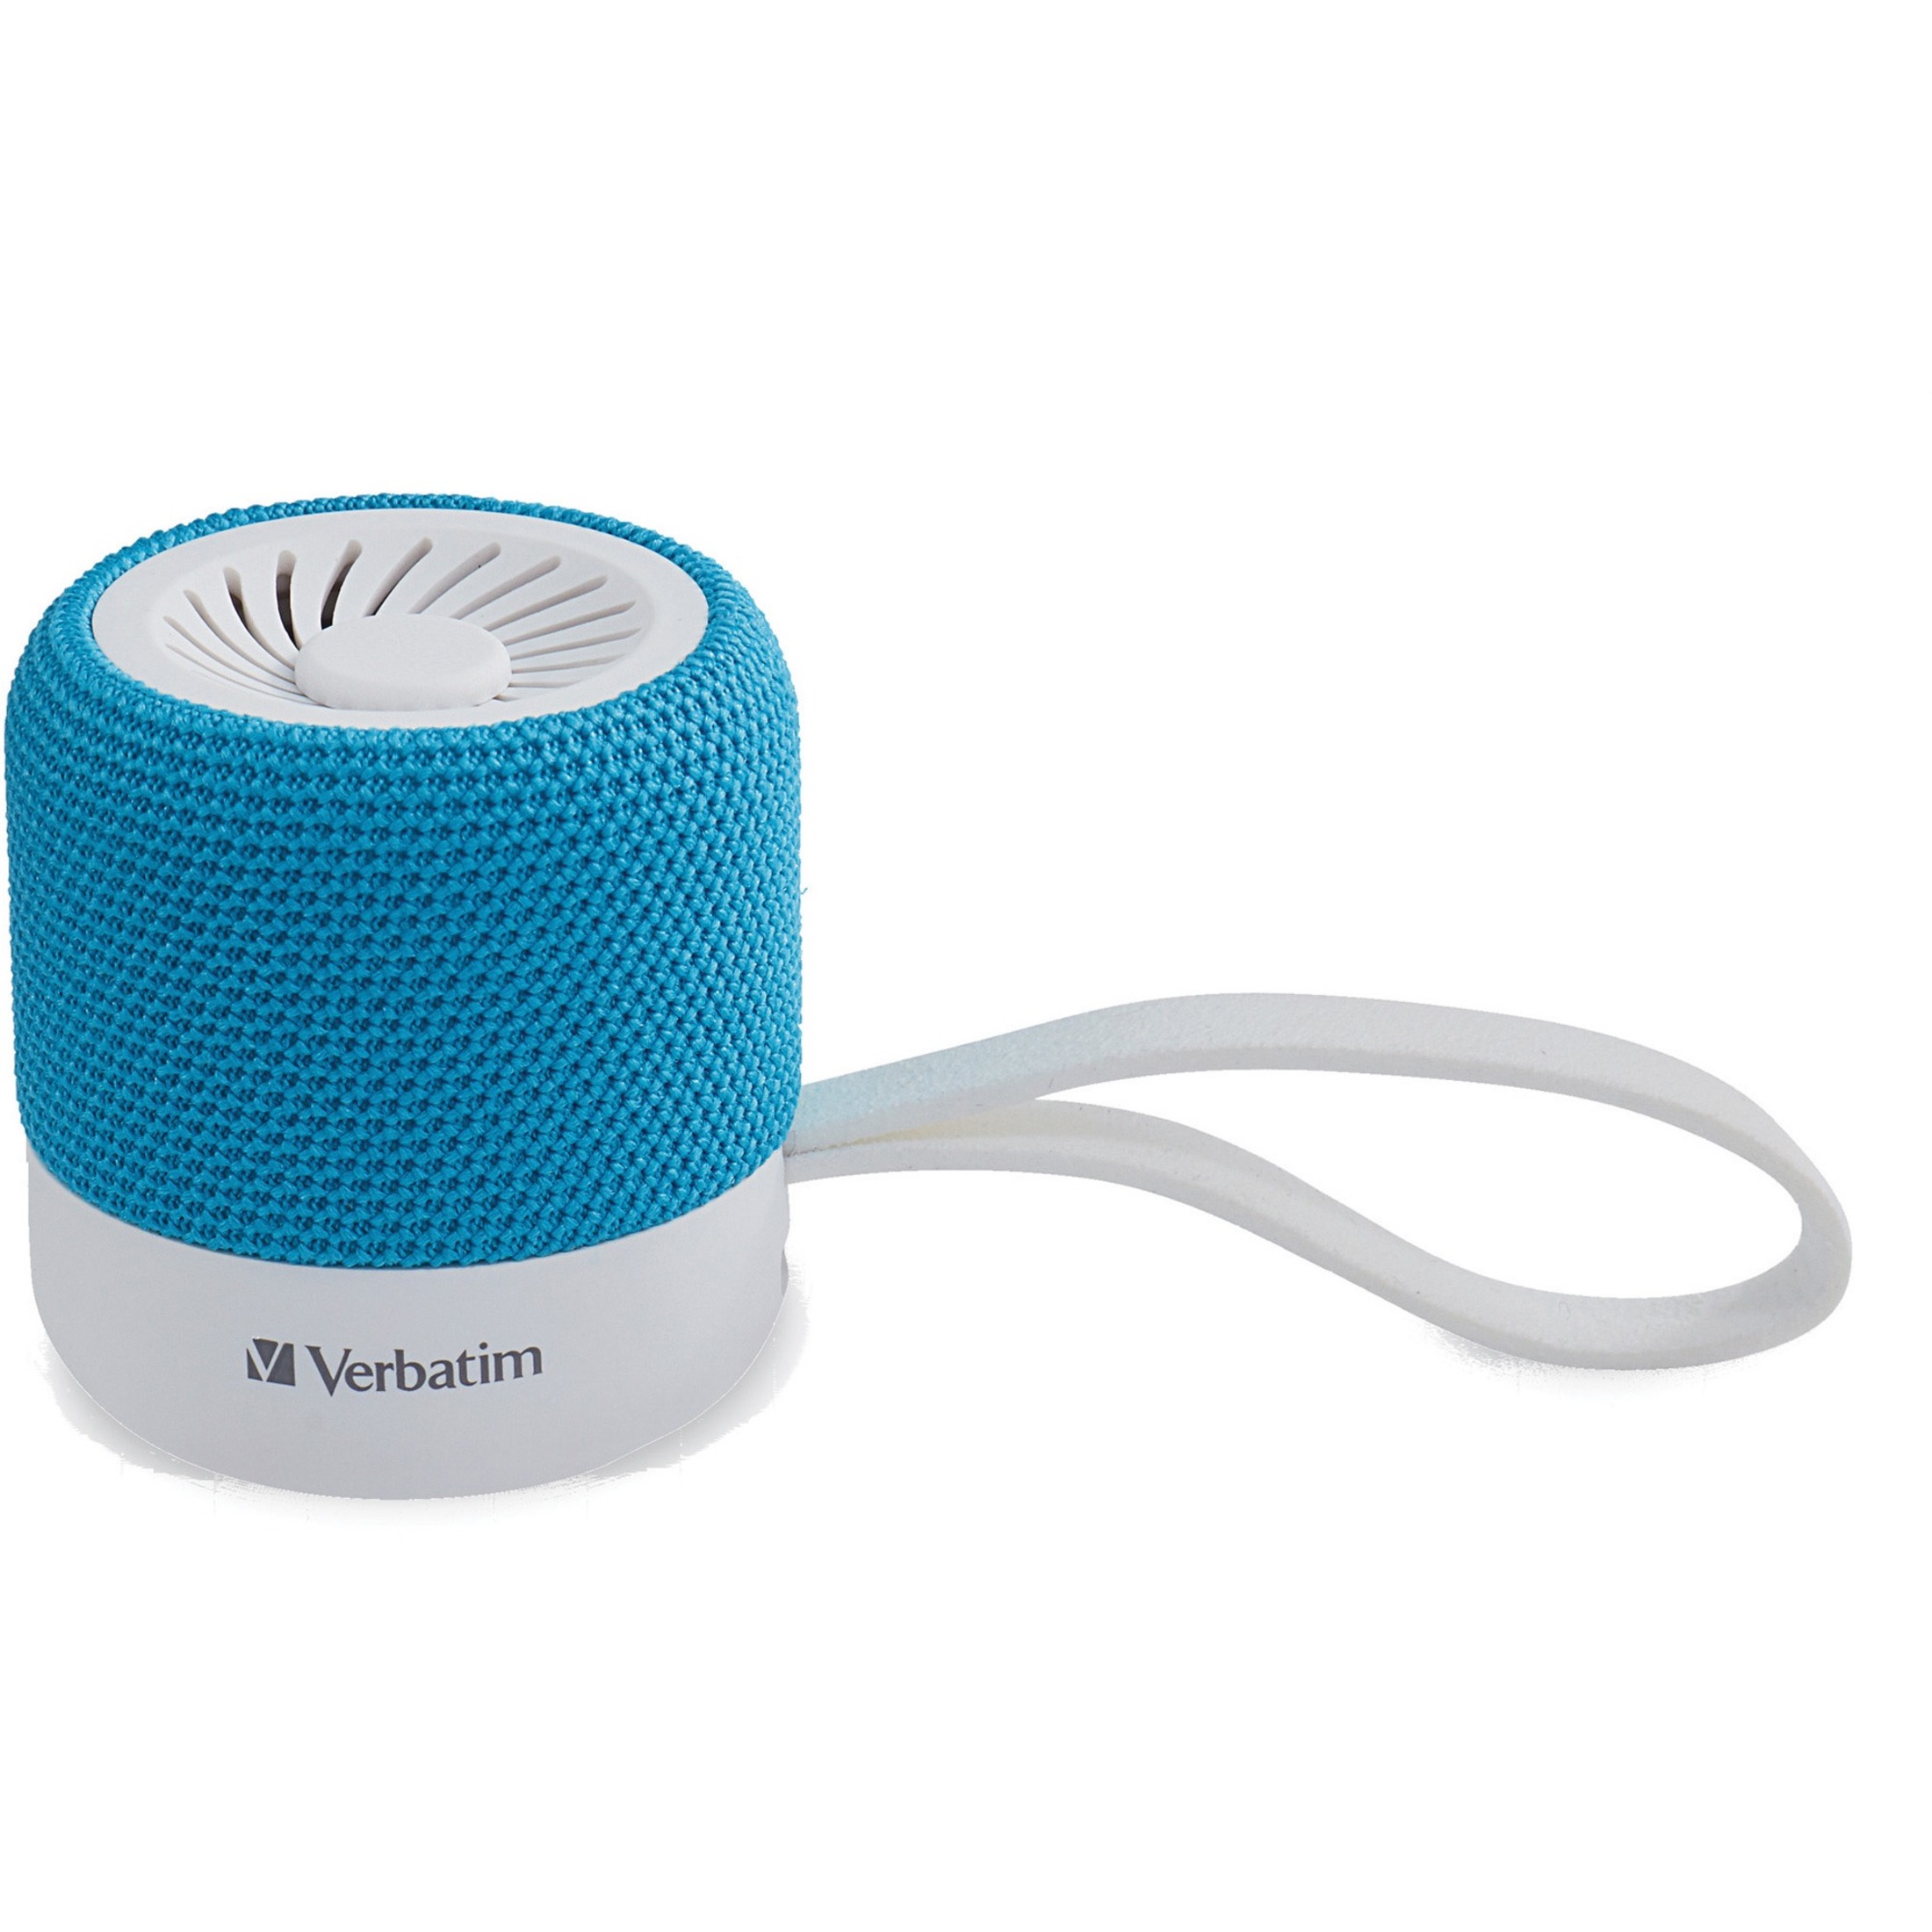 Verbatim Portable Bluetooth Speaker System - Teal - image 1 of 6